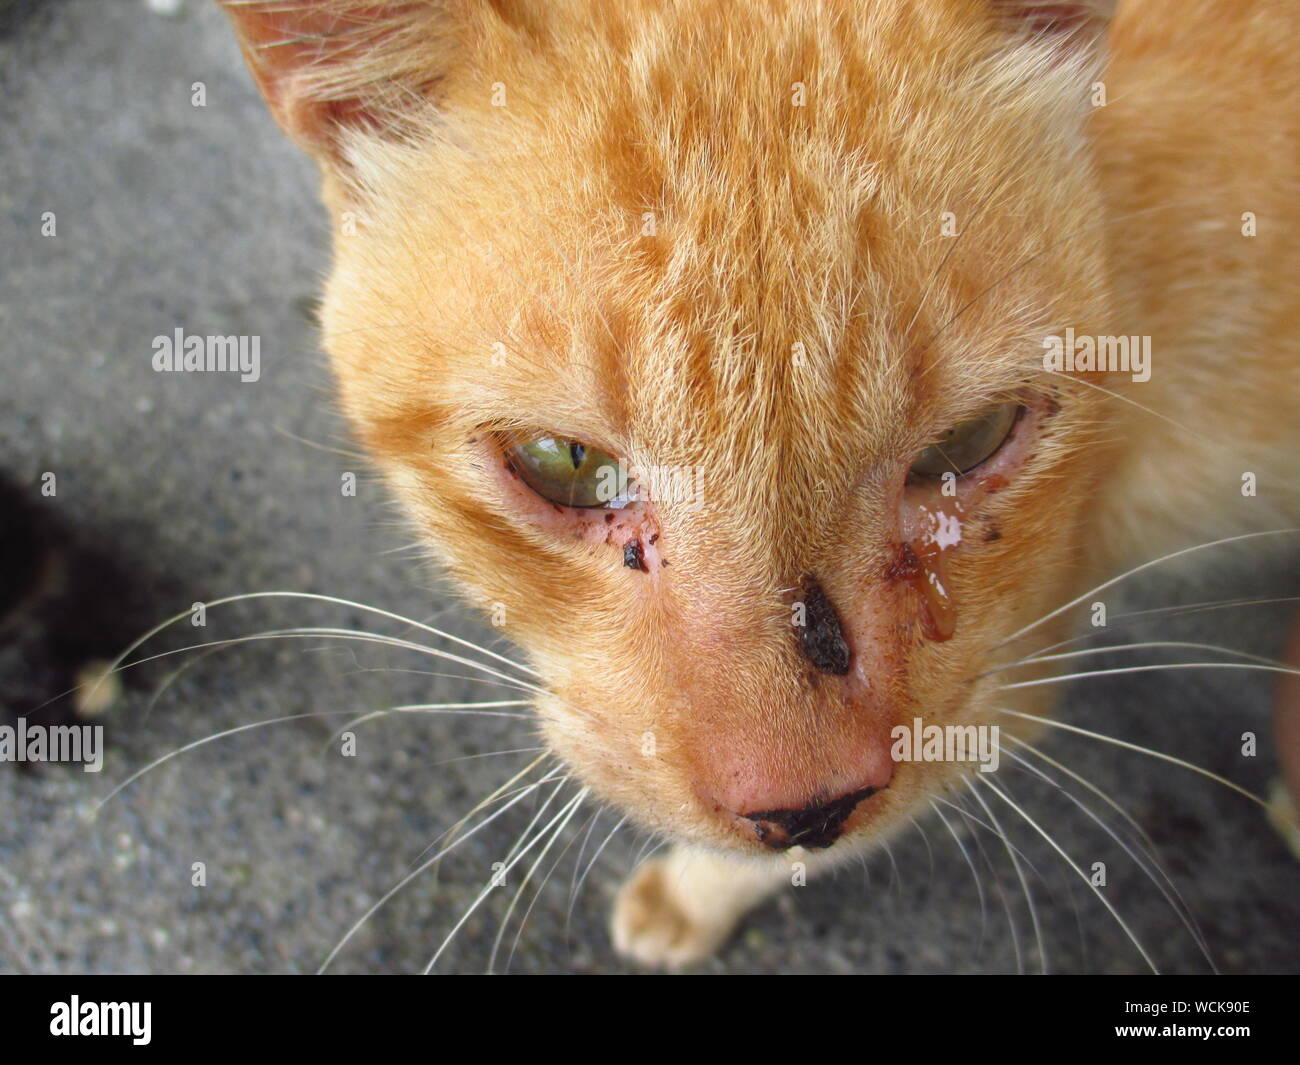 Crying cat -Fotos und -Bildmaterial in hoher Auflösung – Alamy